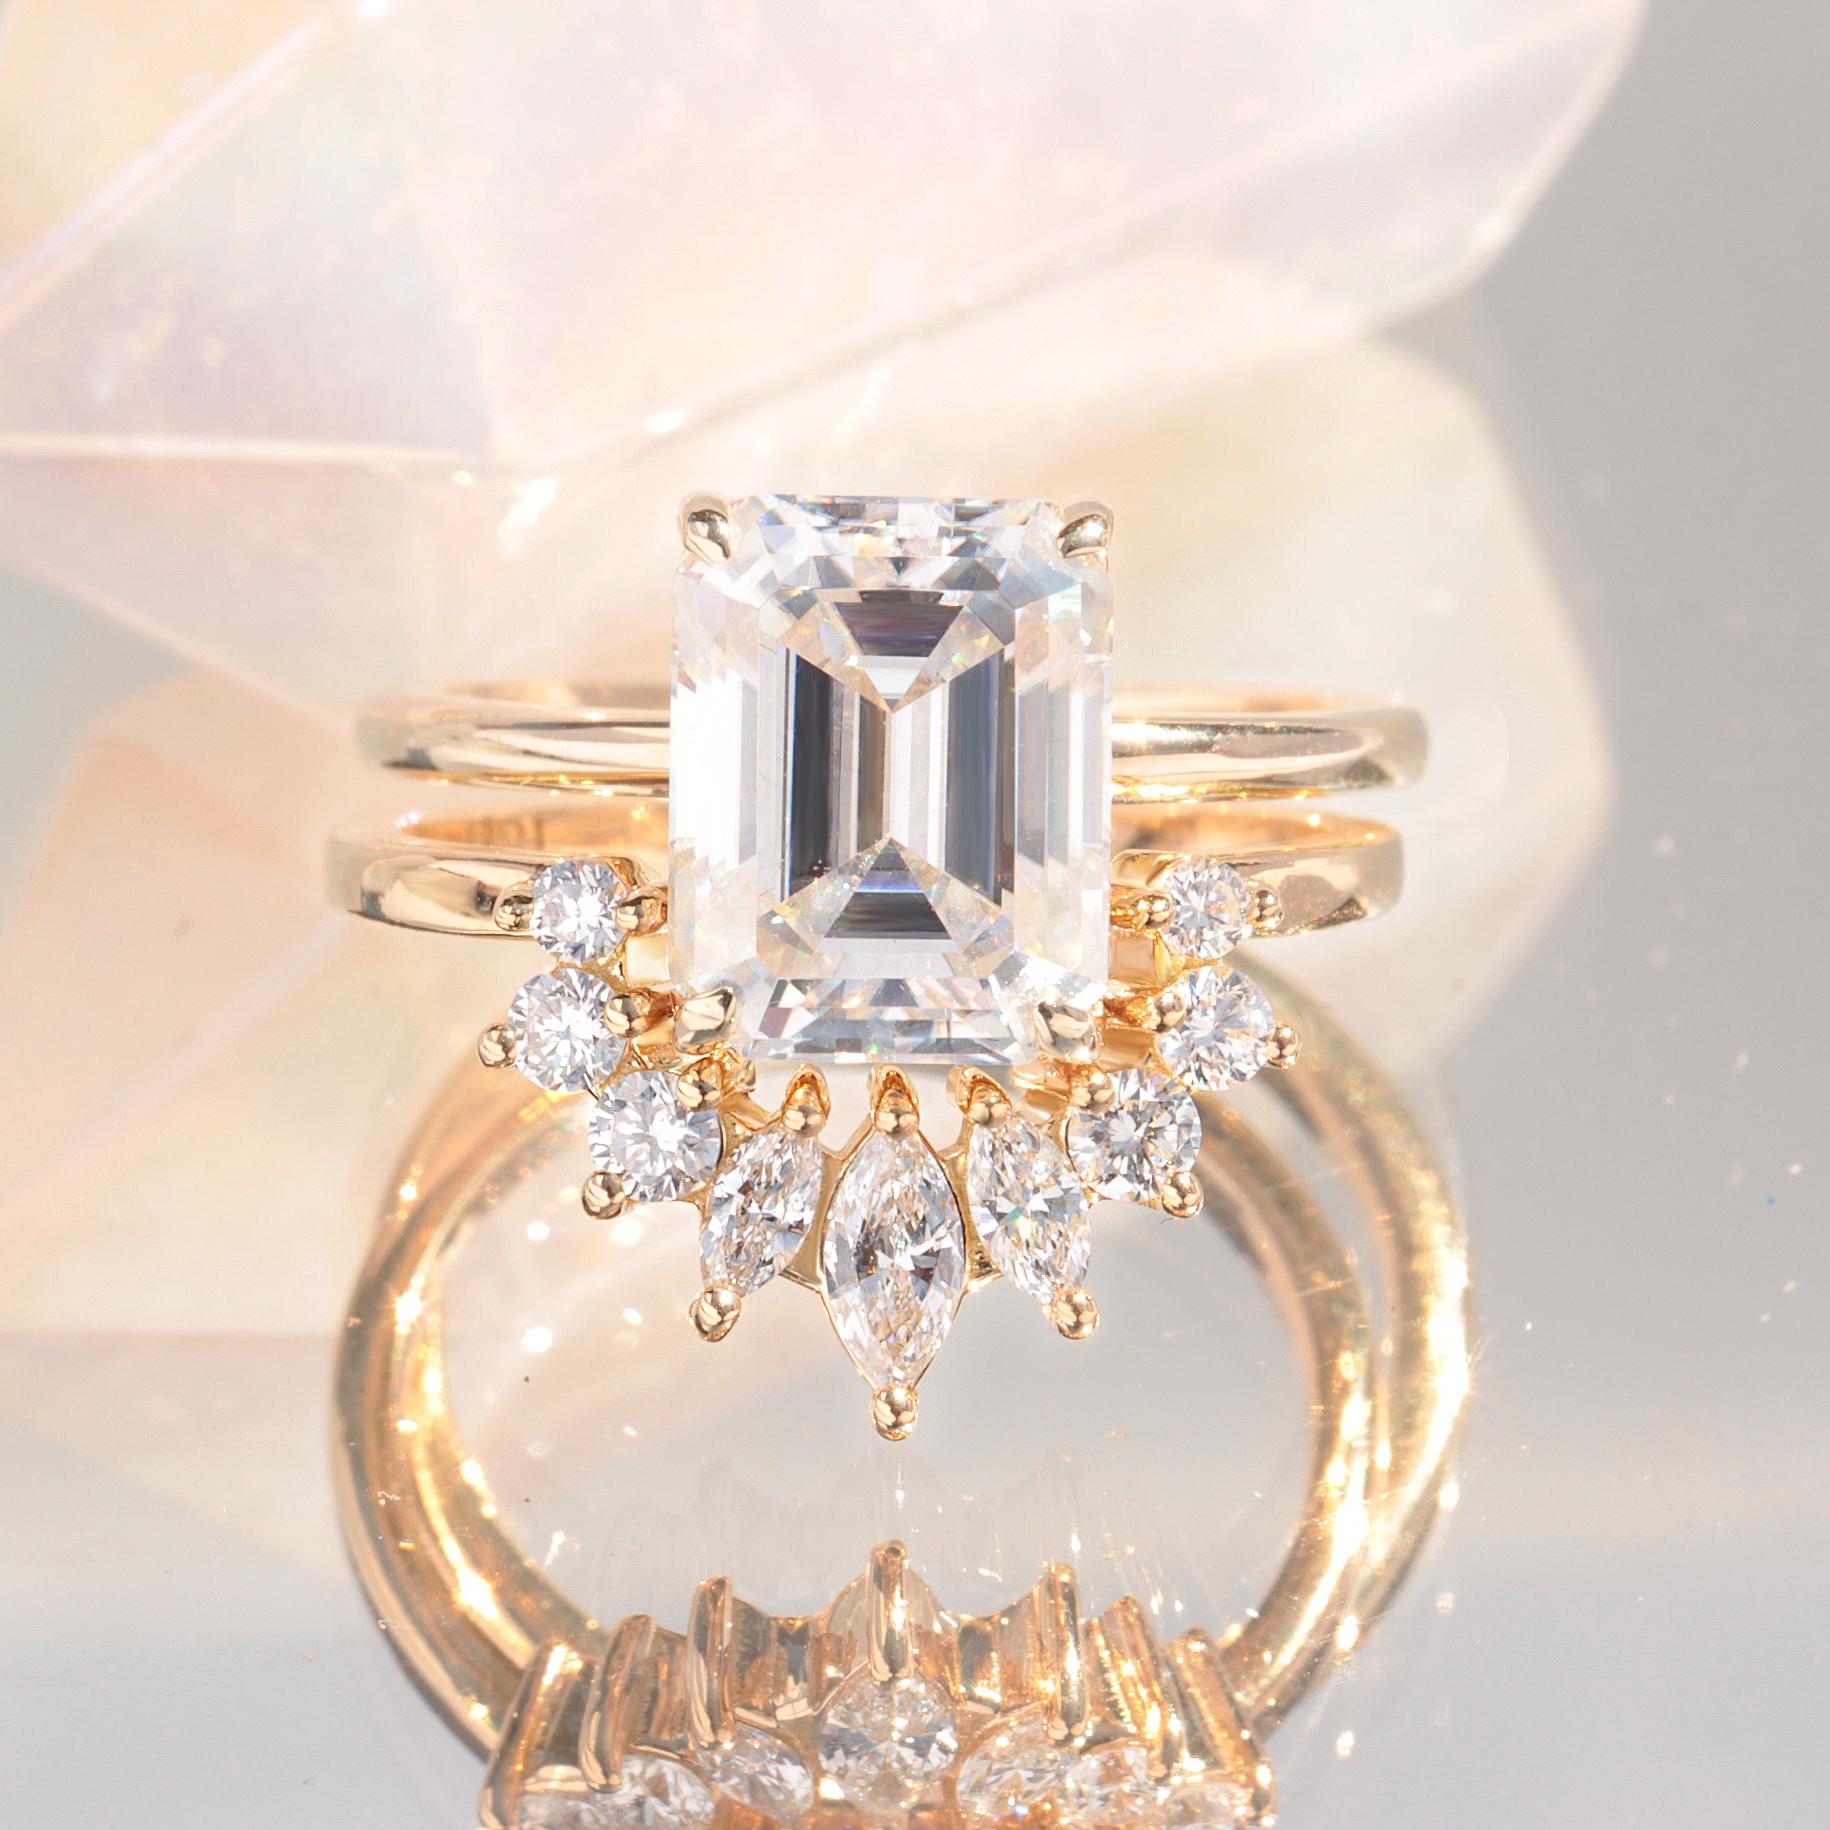 0.7 carat emerald cut diamond ring